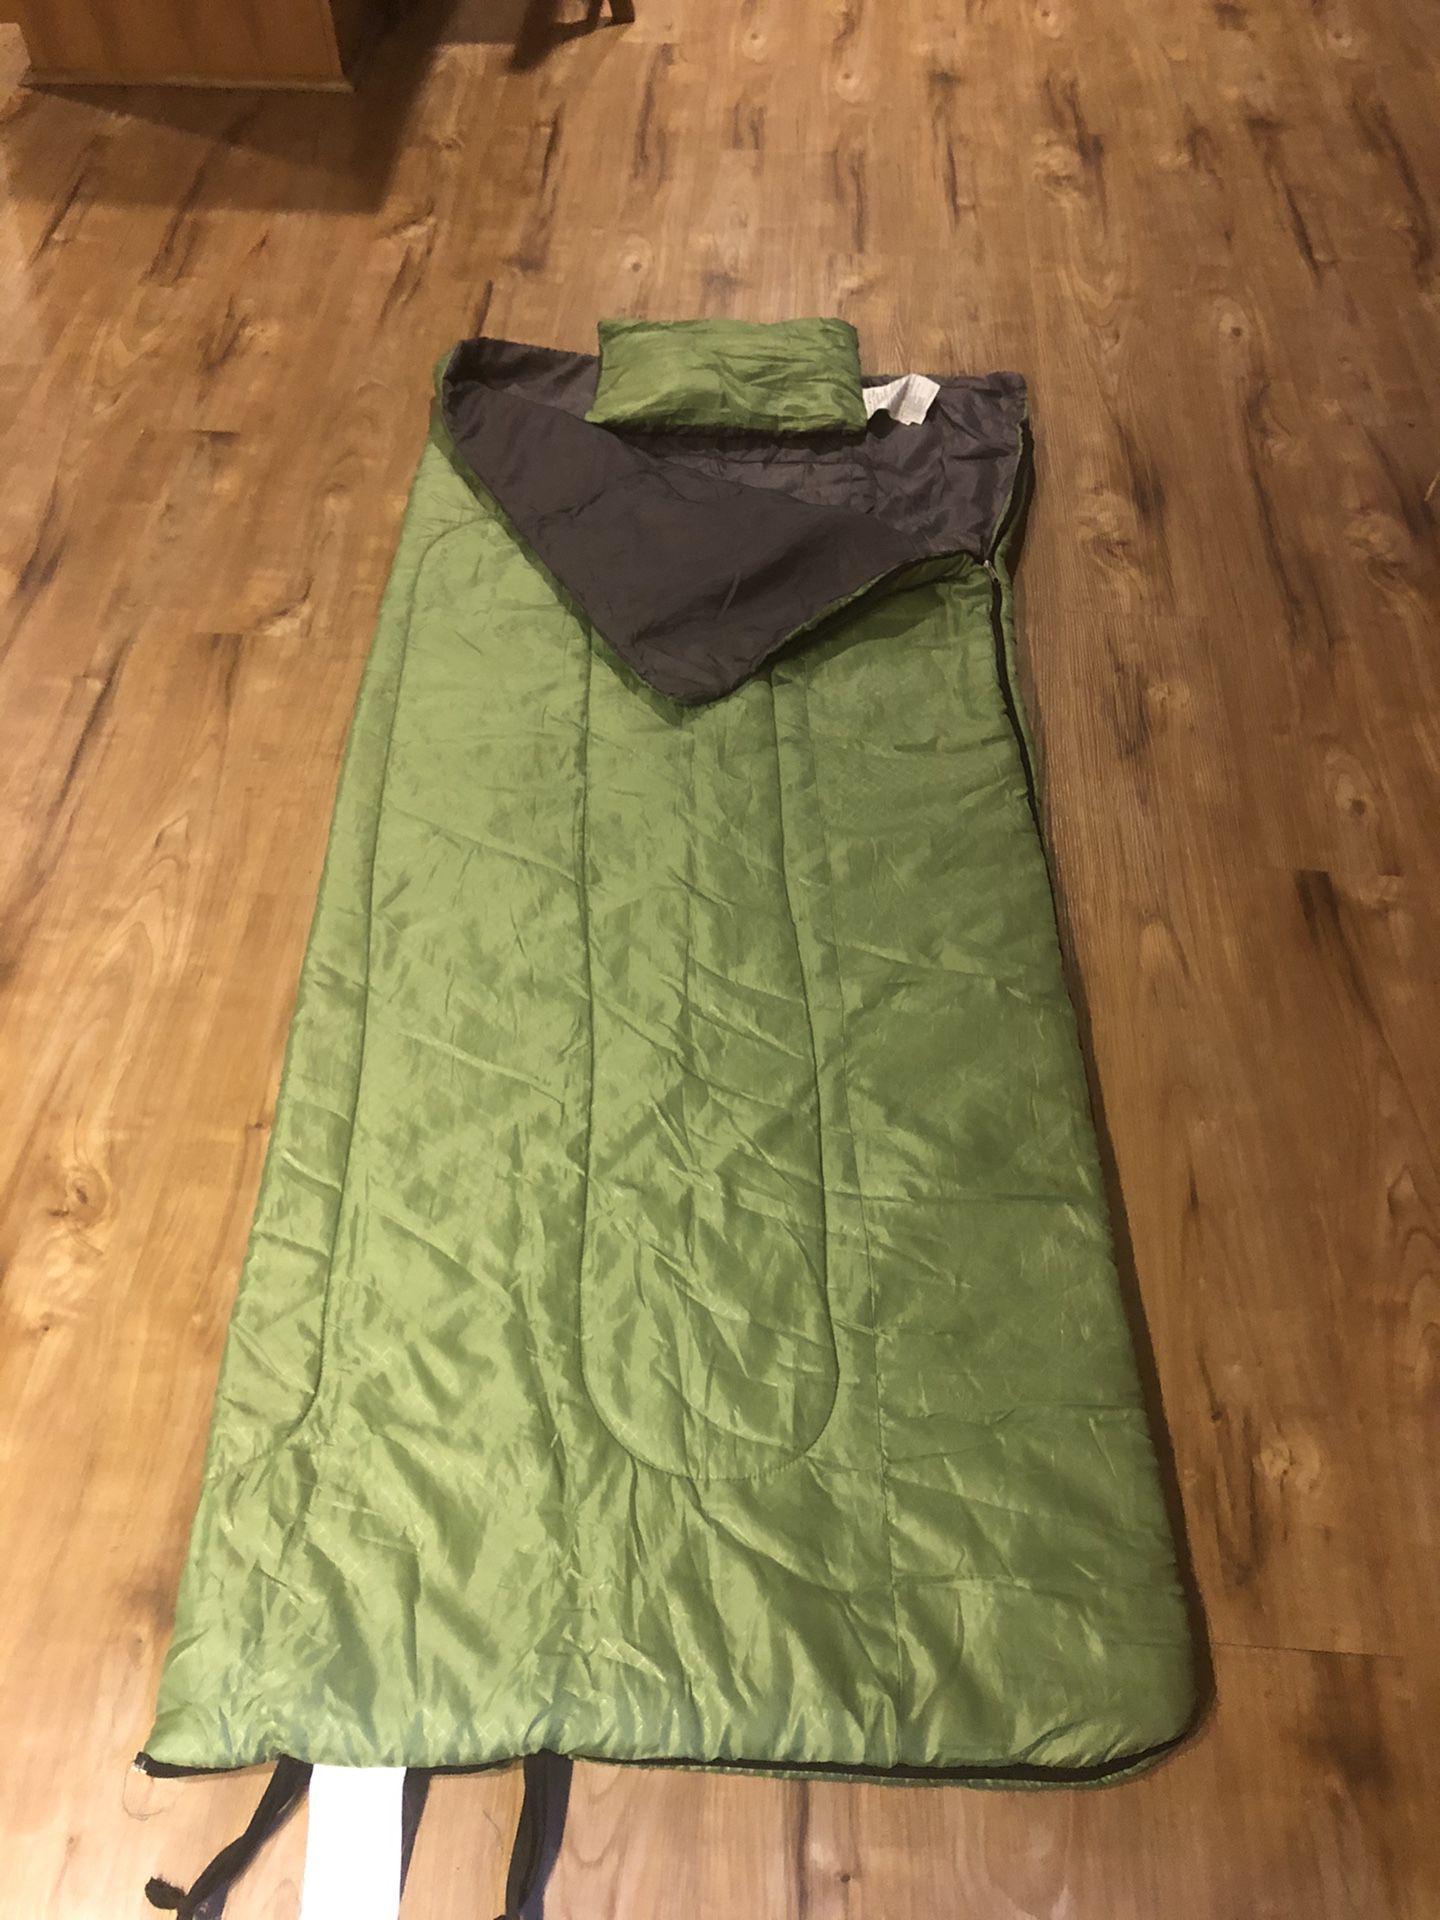 Light/medium Weight Sleeping Bags